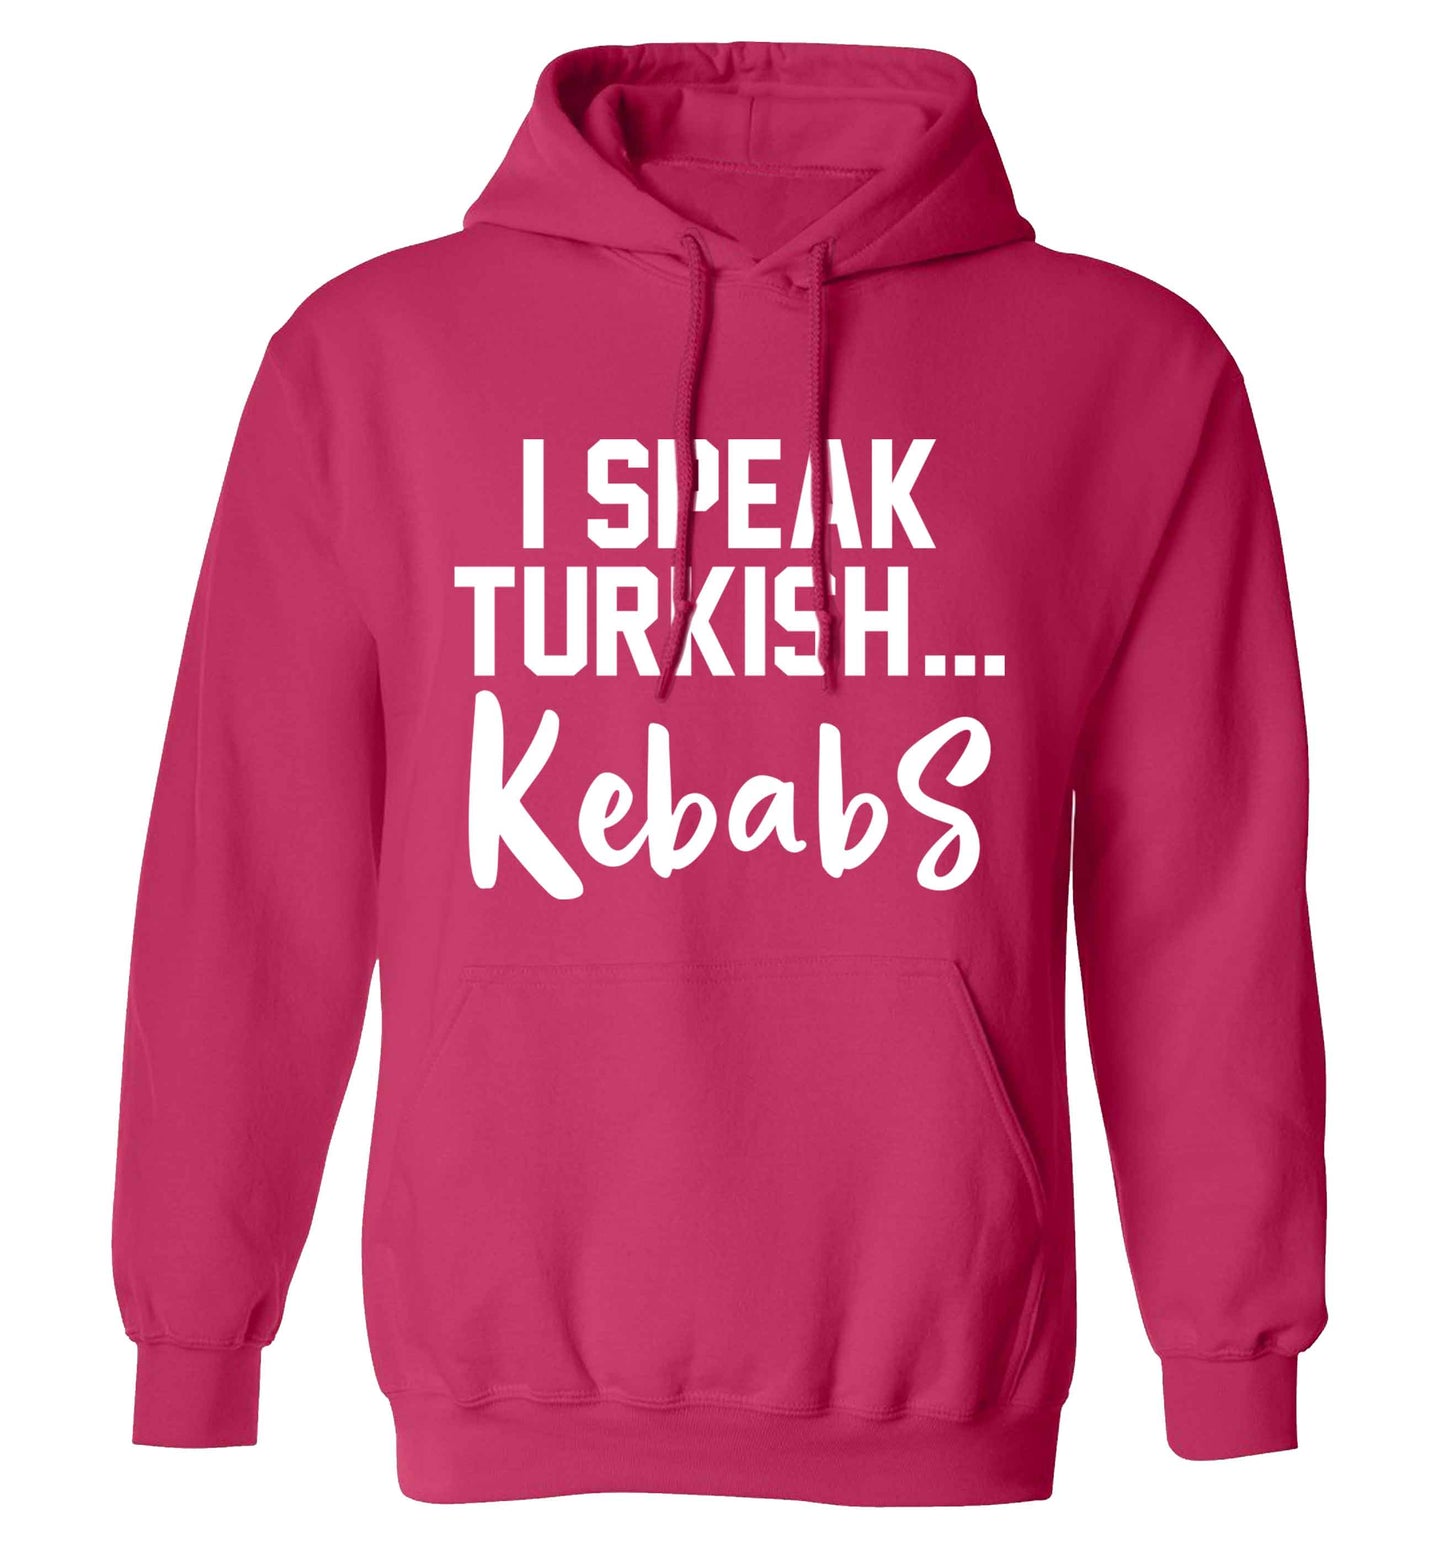 I speak Turkish...kebabs adults unisex pink hoodie 2XL